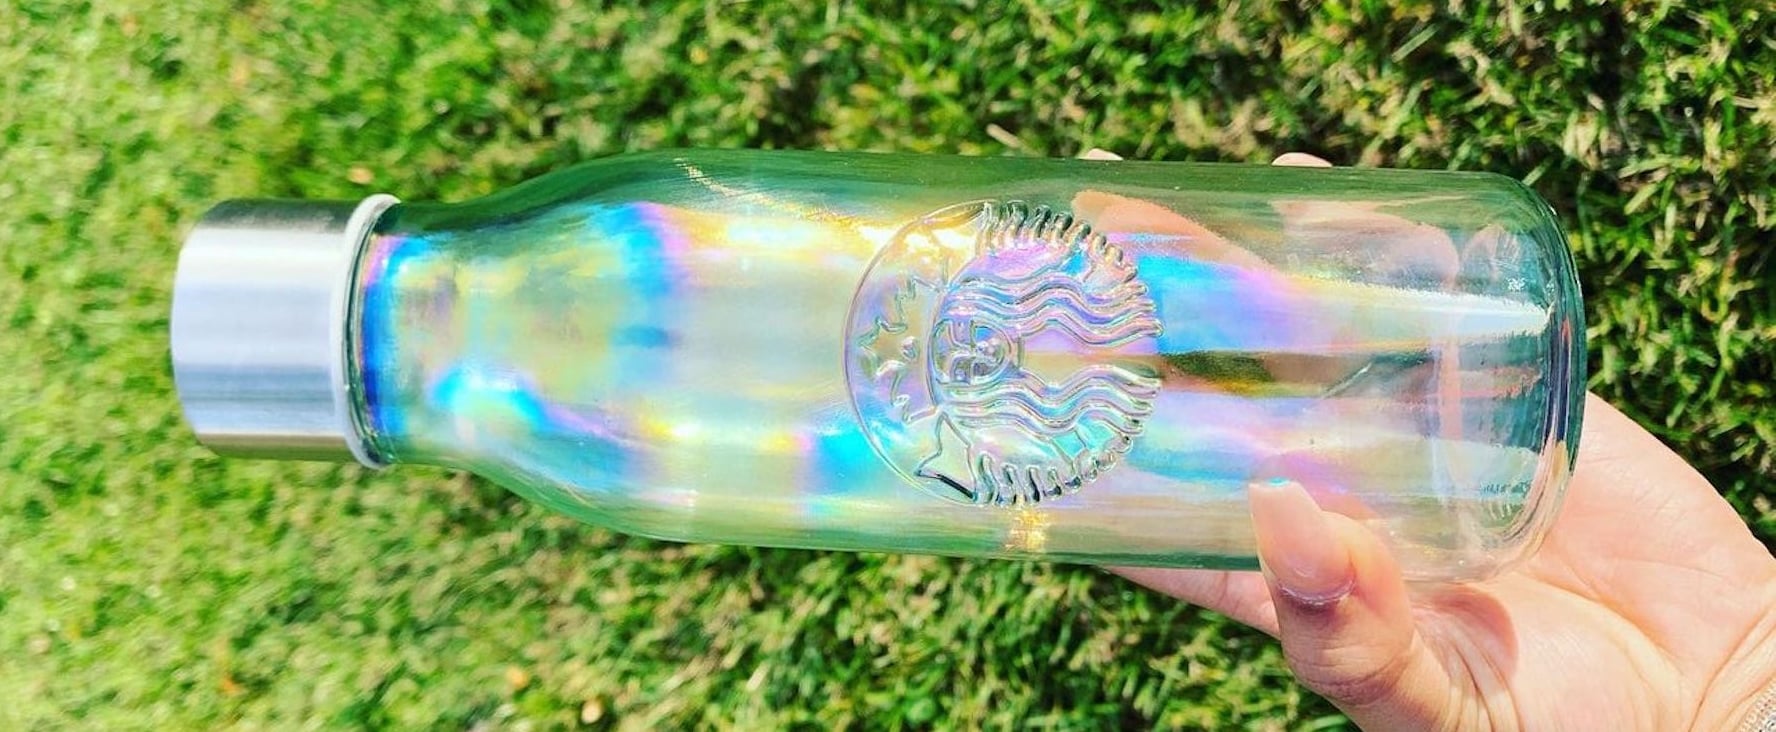 Starbucks Recycled Glass Water Bottle (Iridescent)